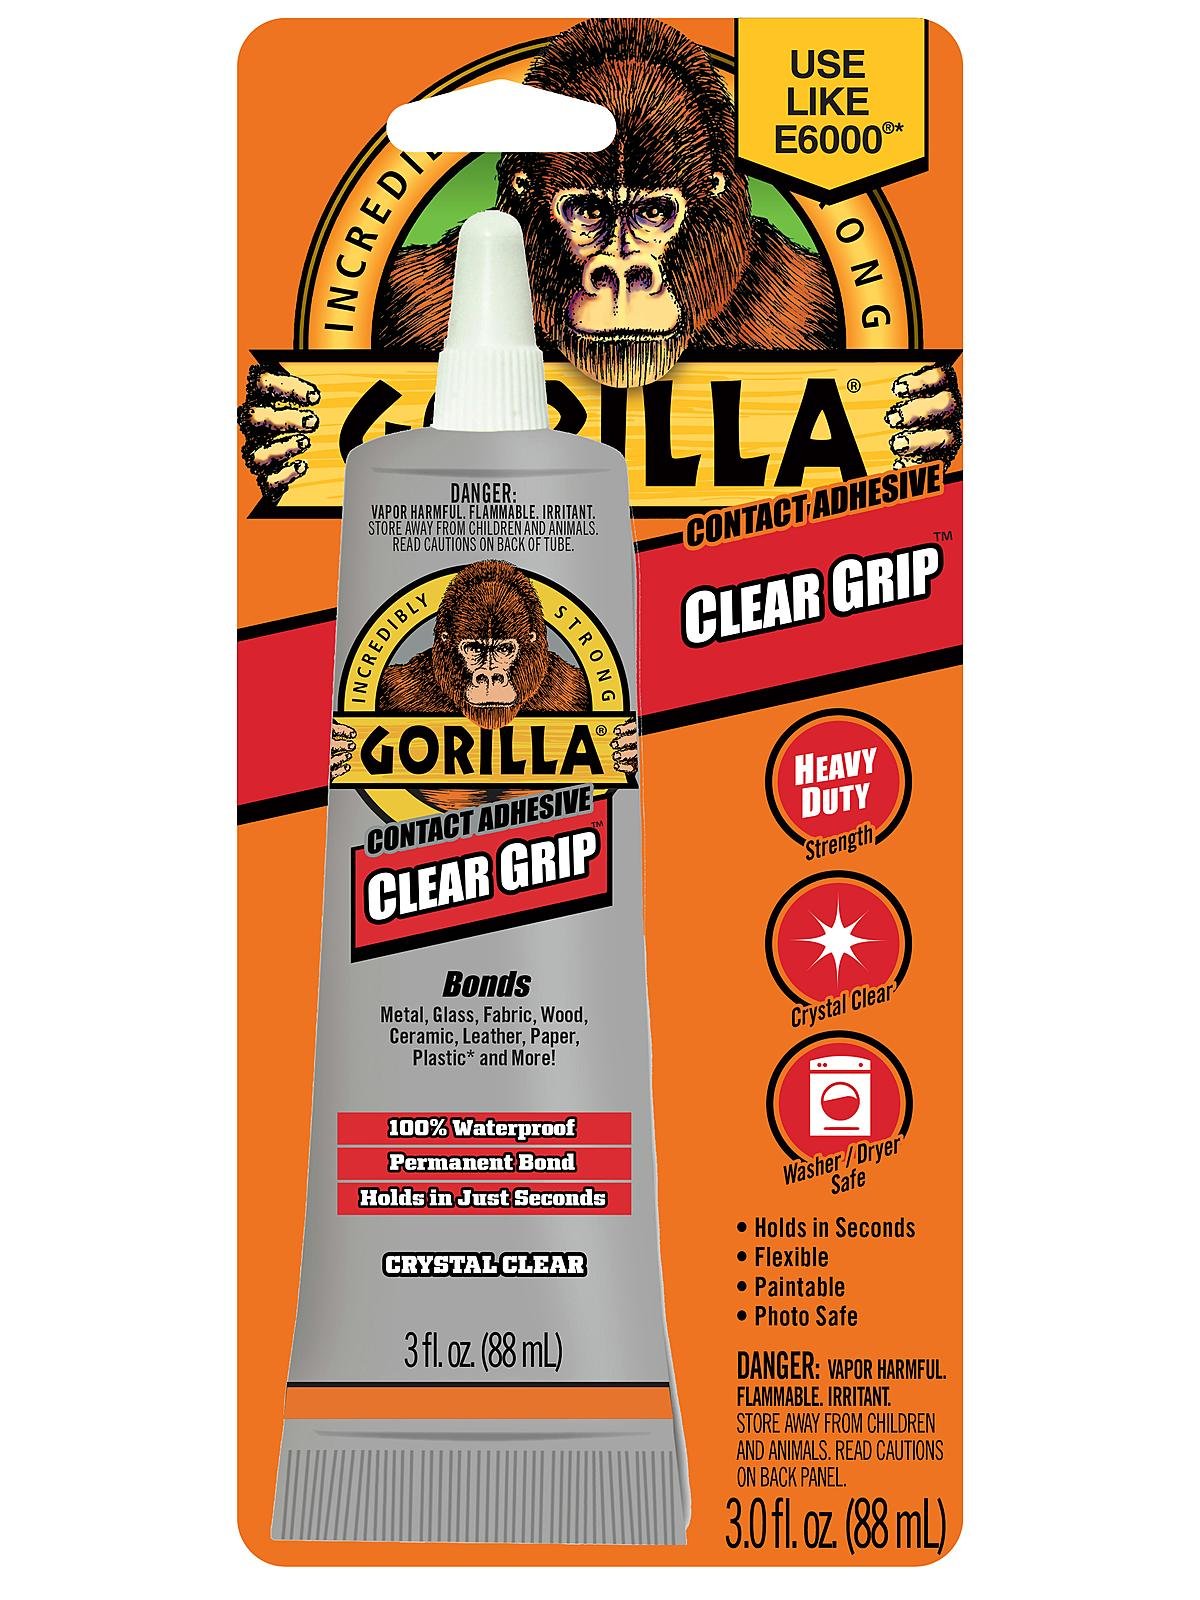 The Gorilla Glue Company - What is your favorite way to use Gorilla Clear  Grip? #ggemployee #gorillaglue #gorillatough #gorillaofcourse